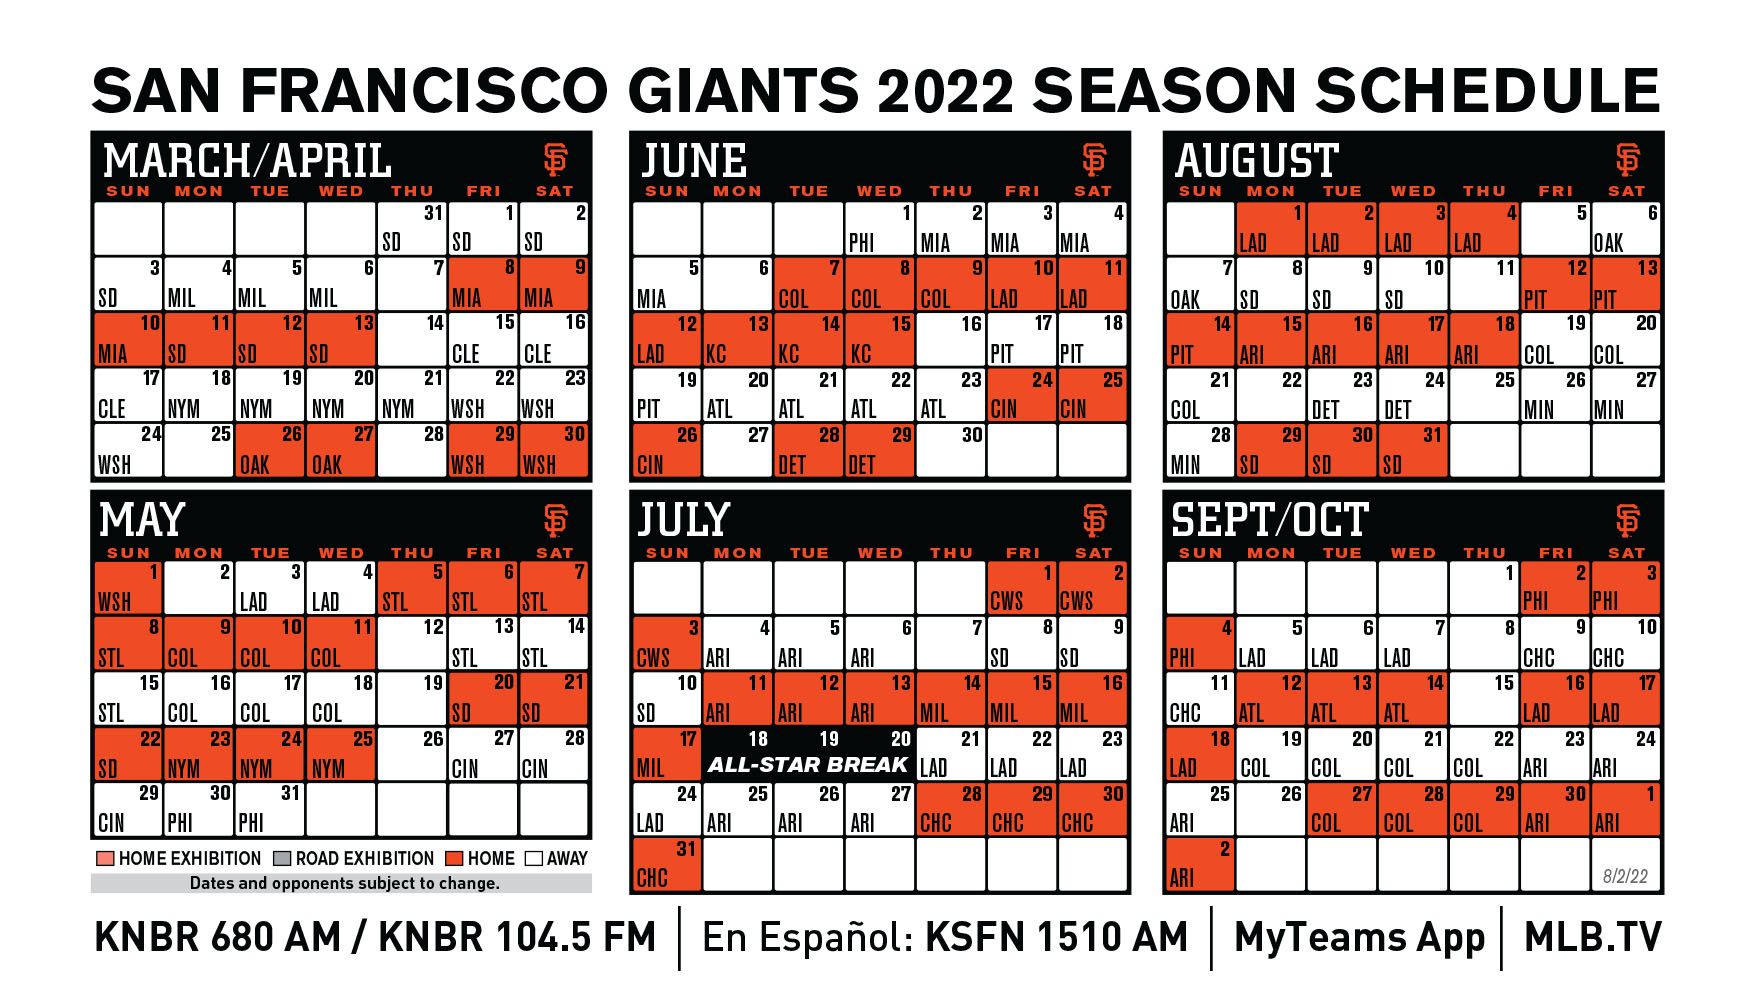 Tentative 2022 Giants schedule released; open season on the road again